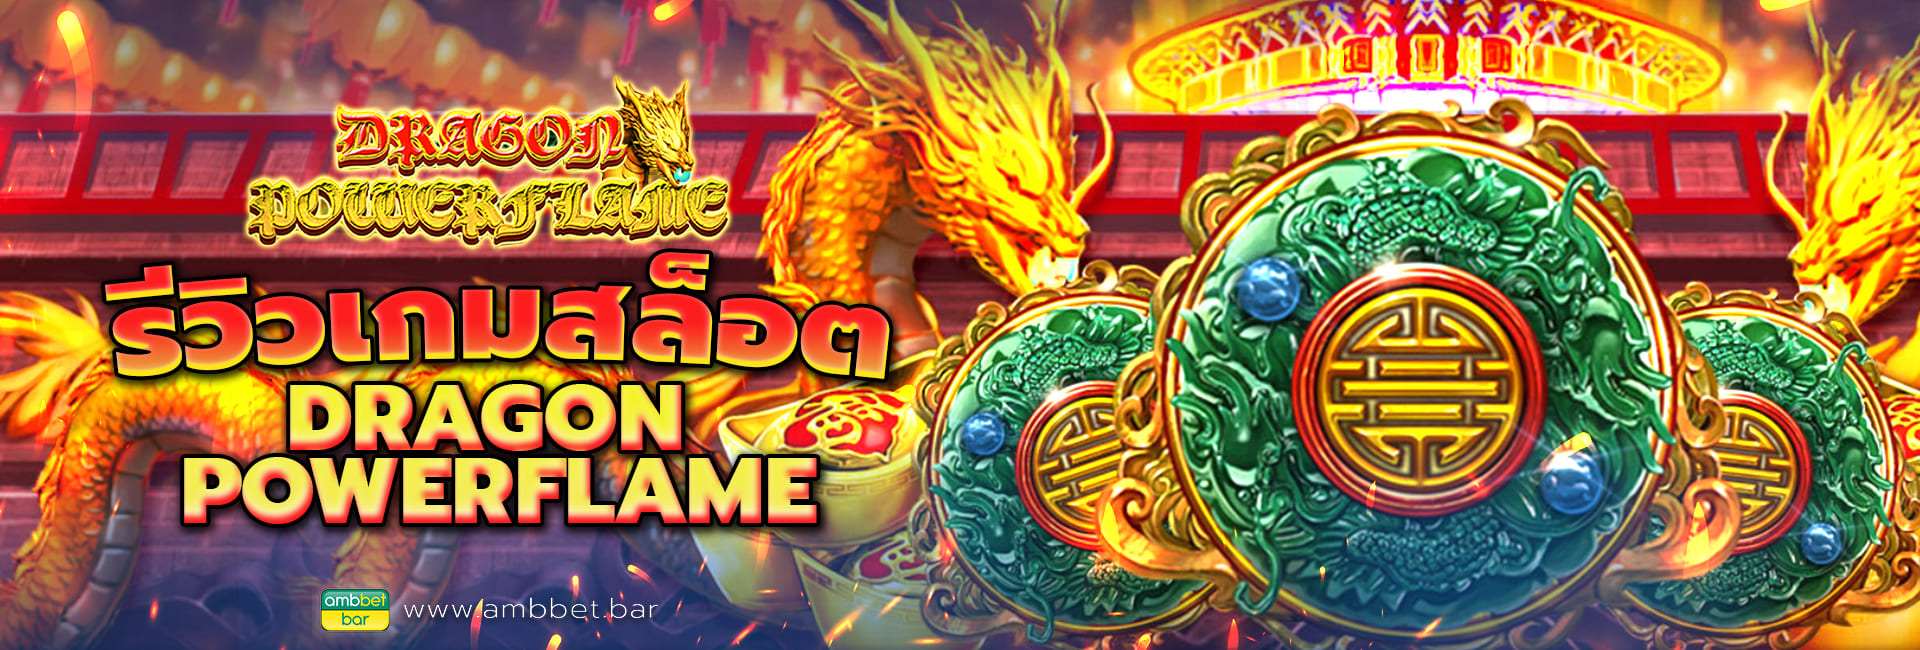 Dragon Powerflame banner